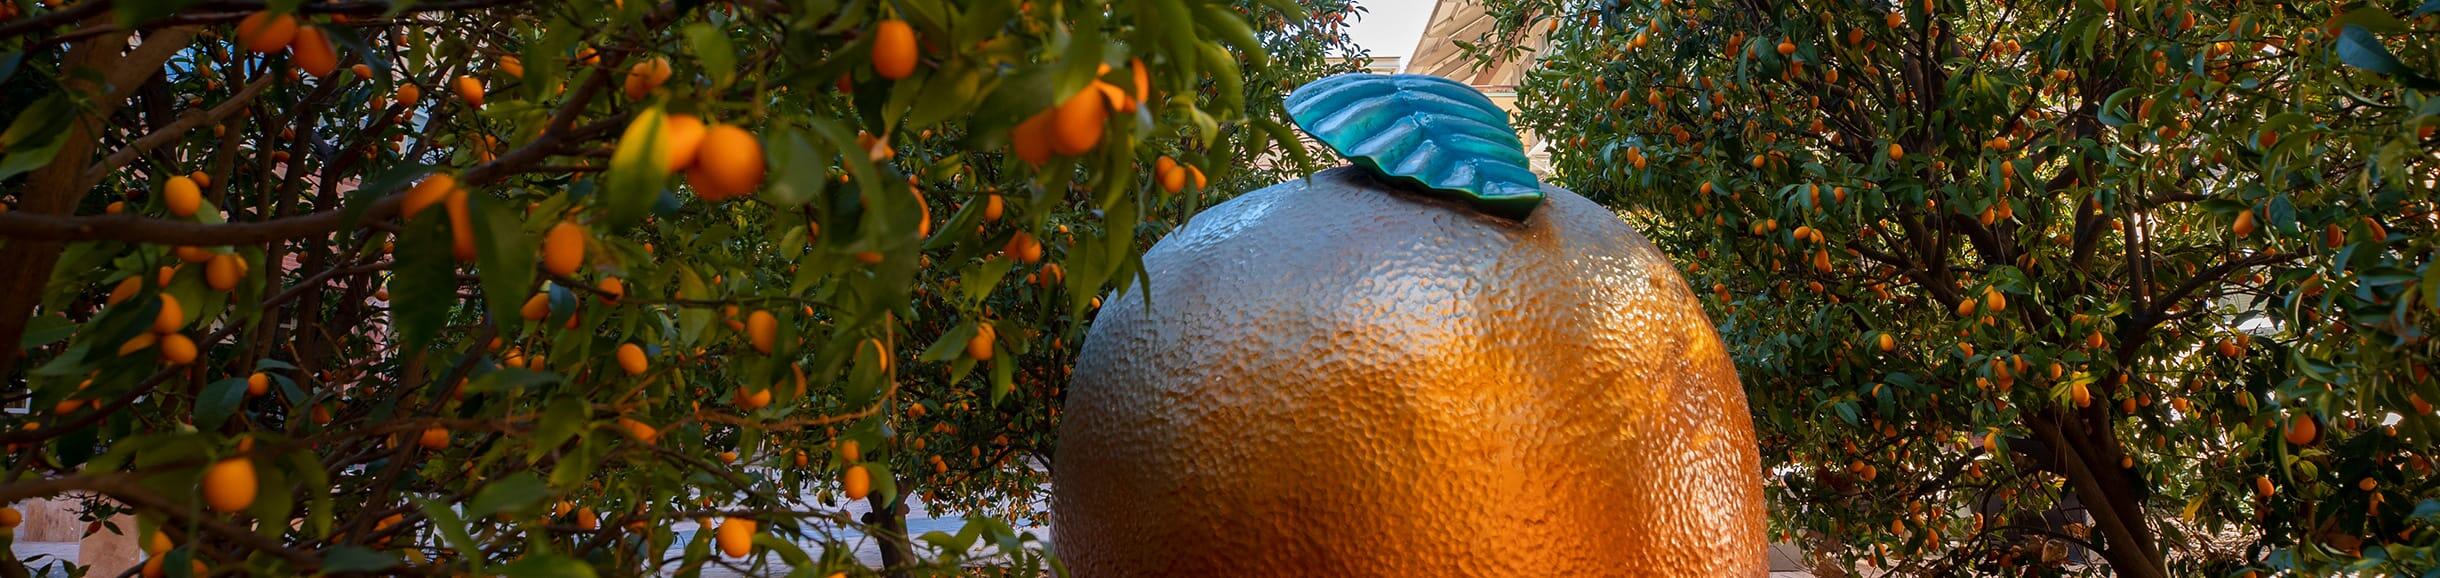 Orange Statue in an Orange Grove